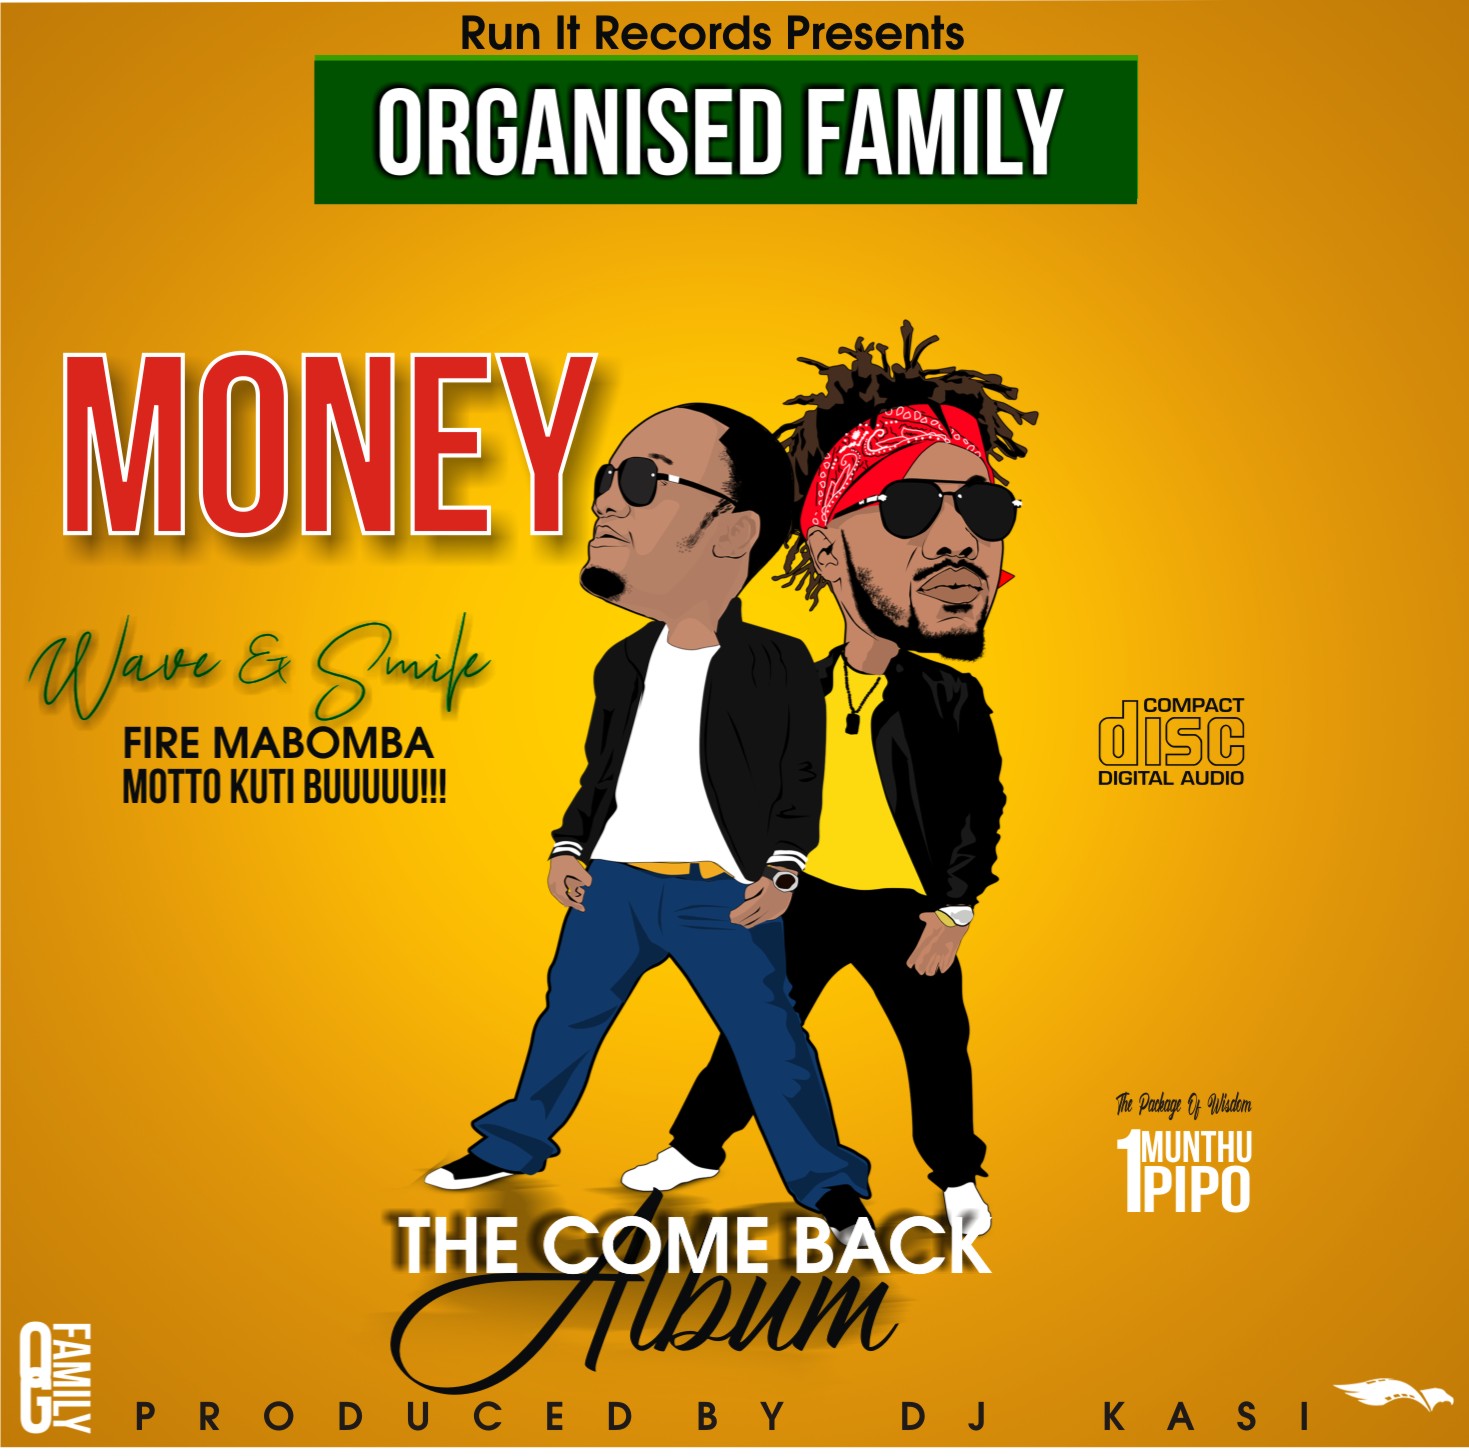 Organised Family - "Money" Mp3